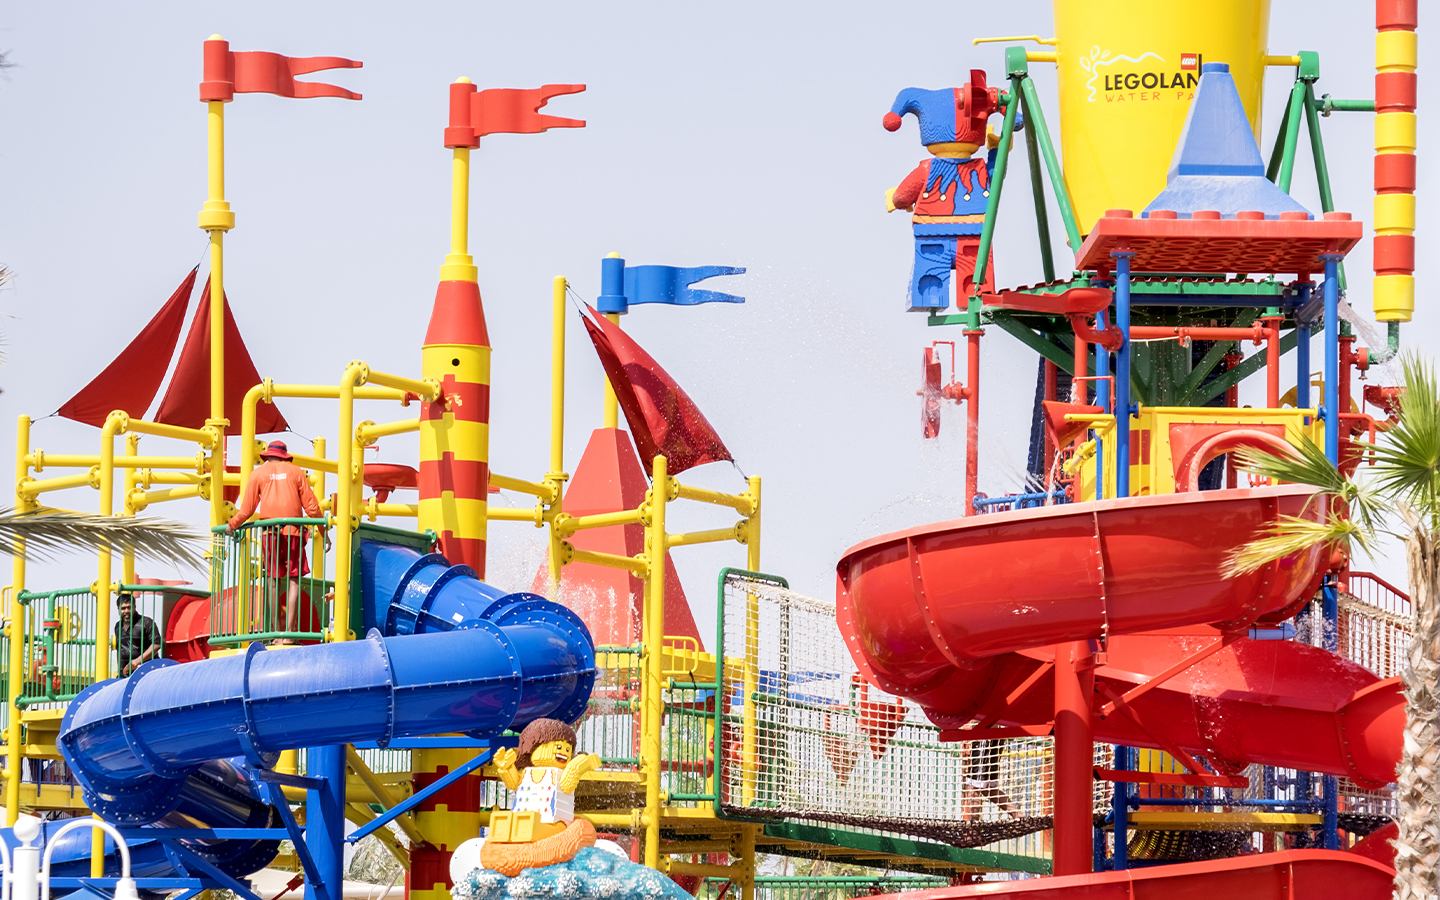 The world’s biggest Legoland resort looks set to open on schedule